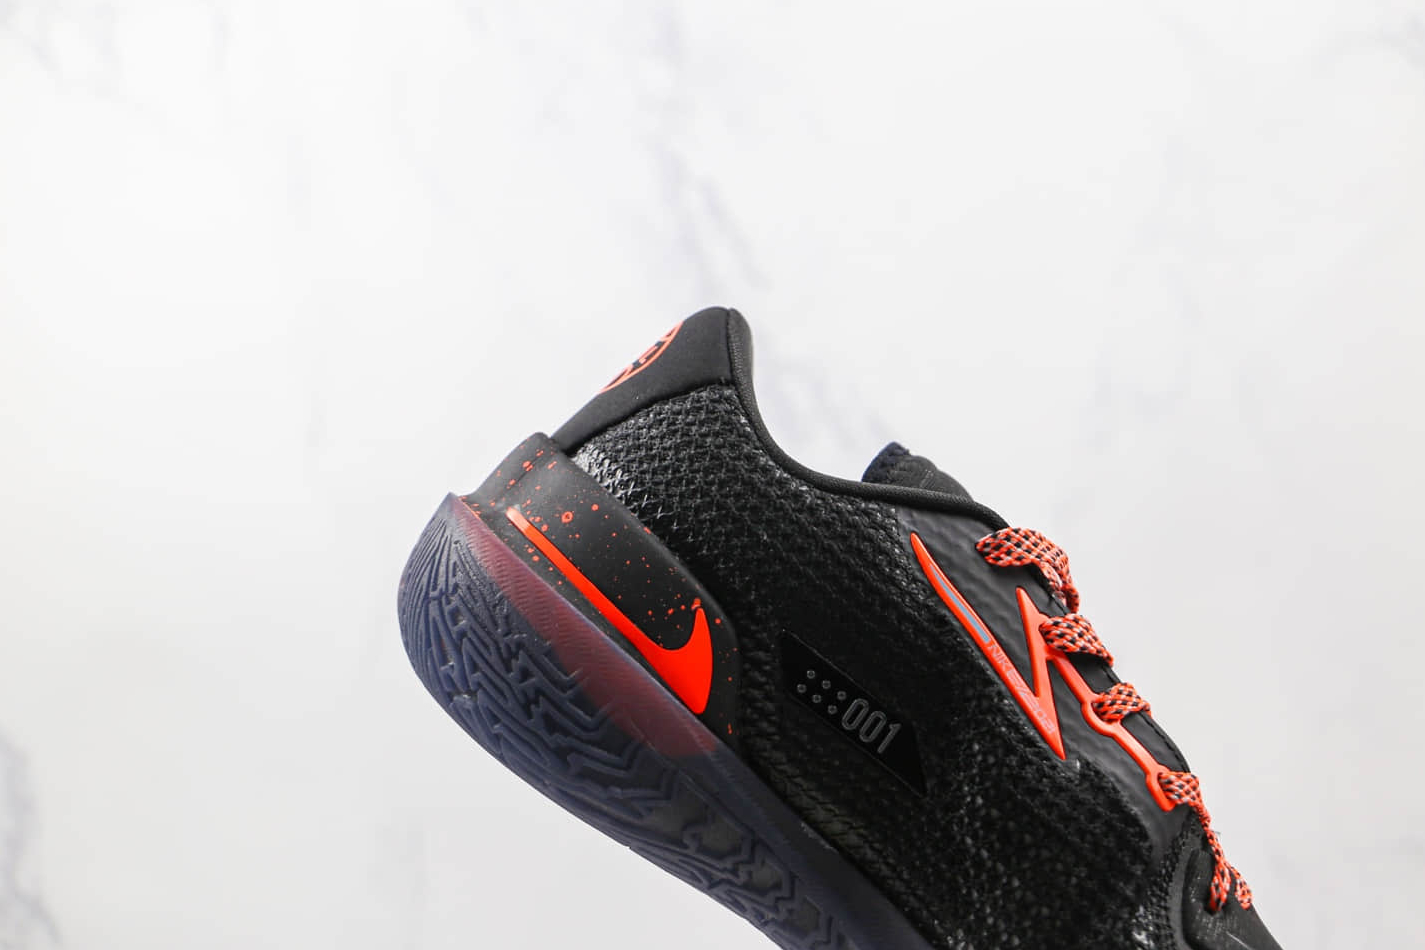 Nike Air Zoom GT Cut 'EYBL - Black Hyper Crimson' DM2826-001 - Shop Now at Affordable Prices!